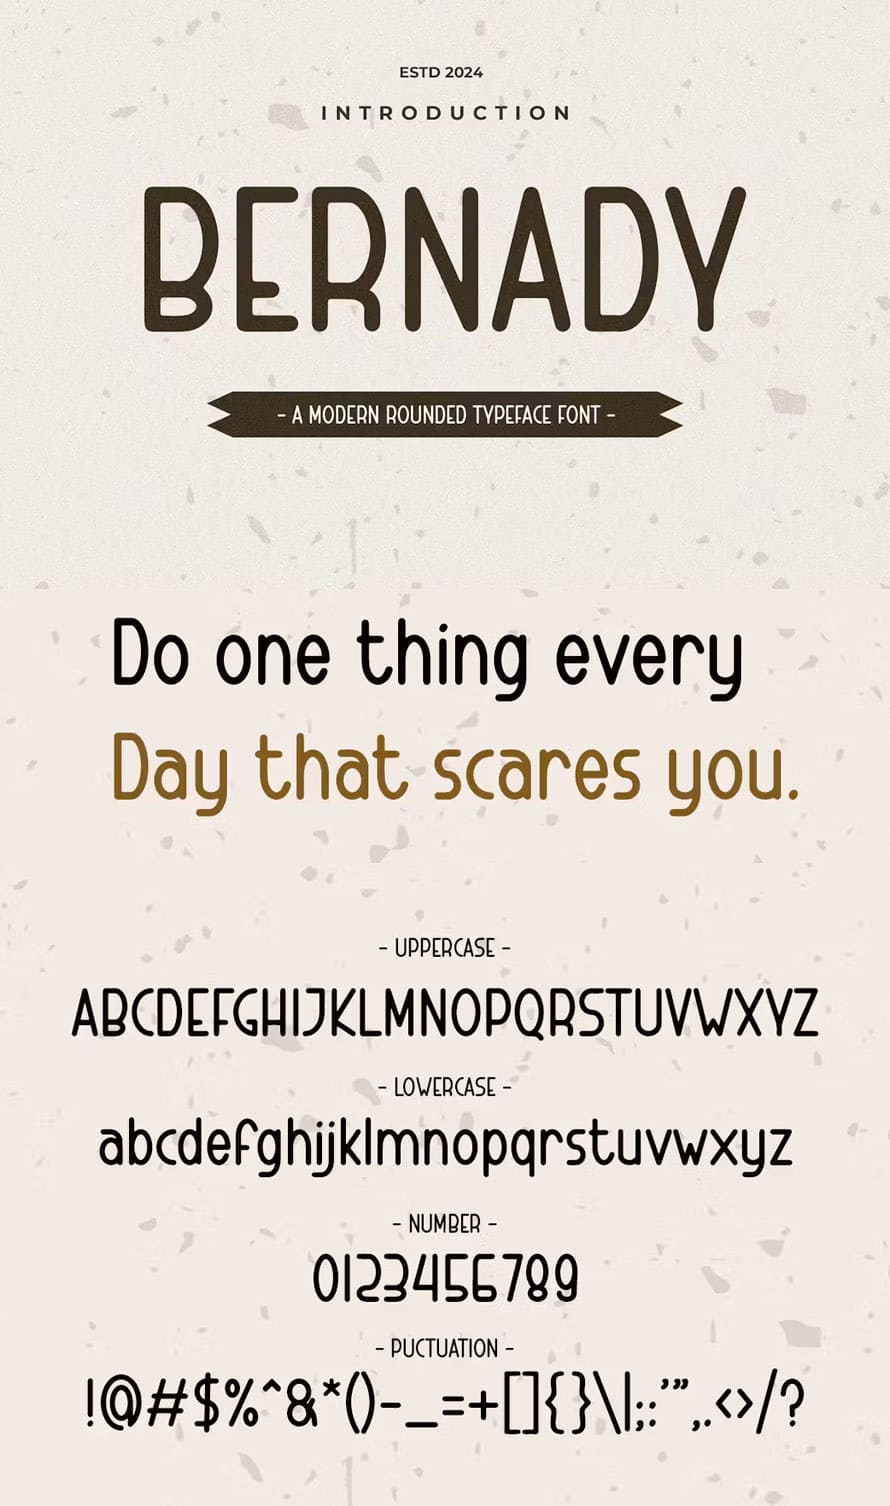 Bernady - A Round Typeface Font